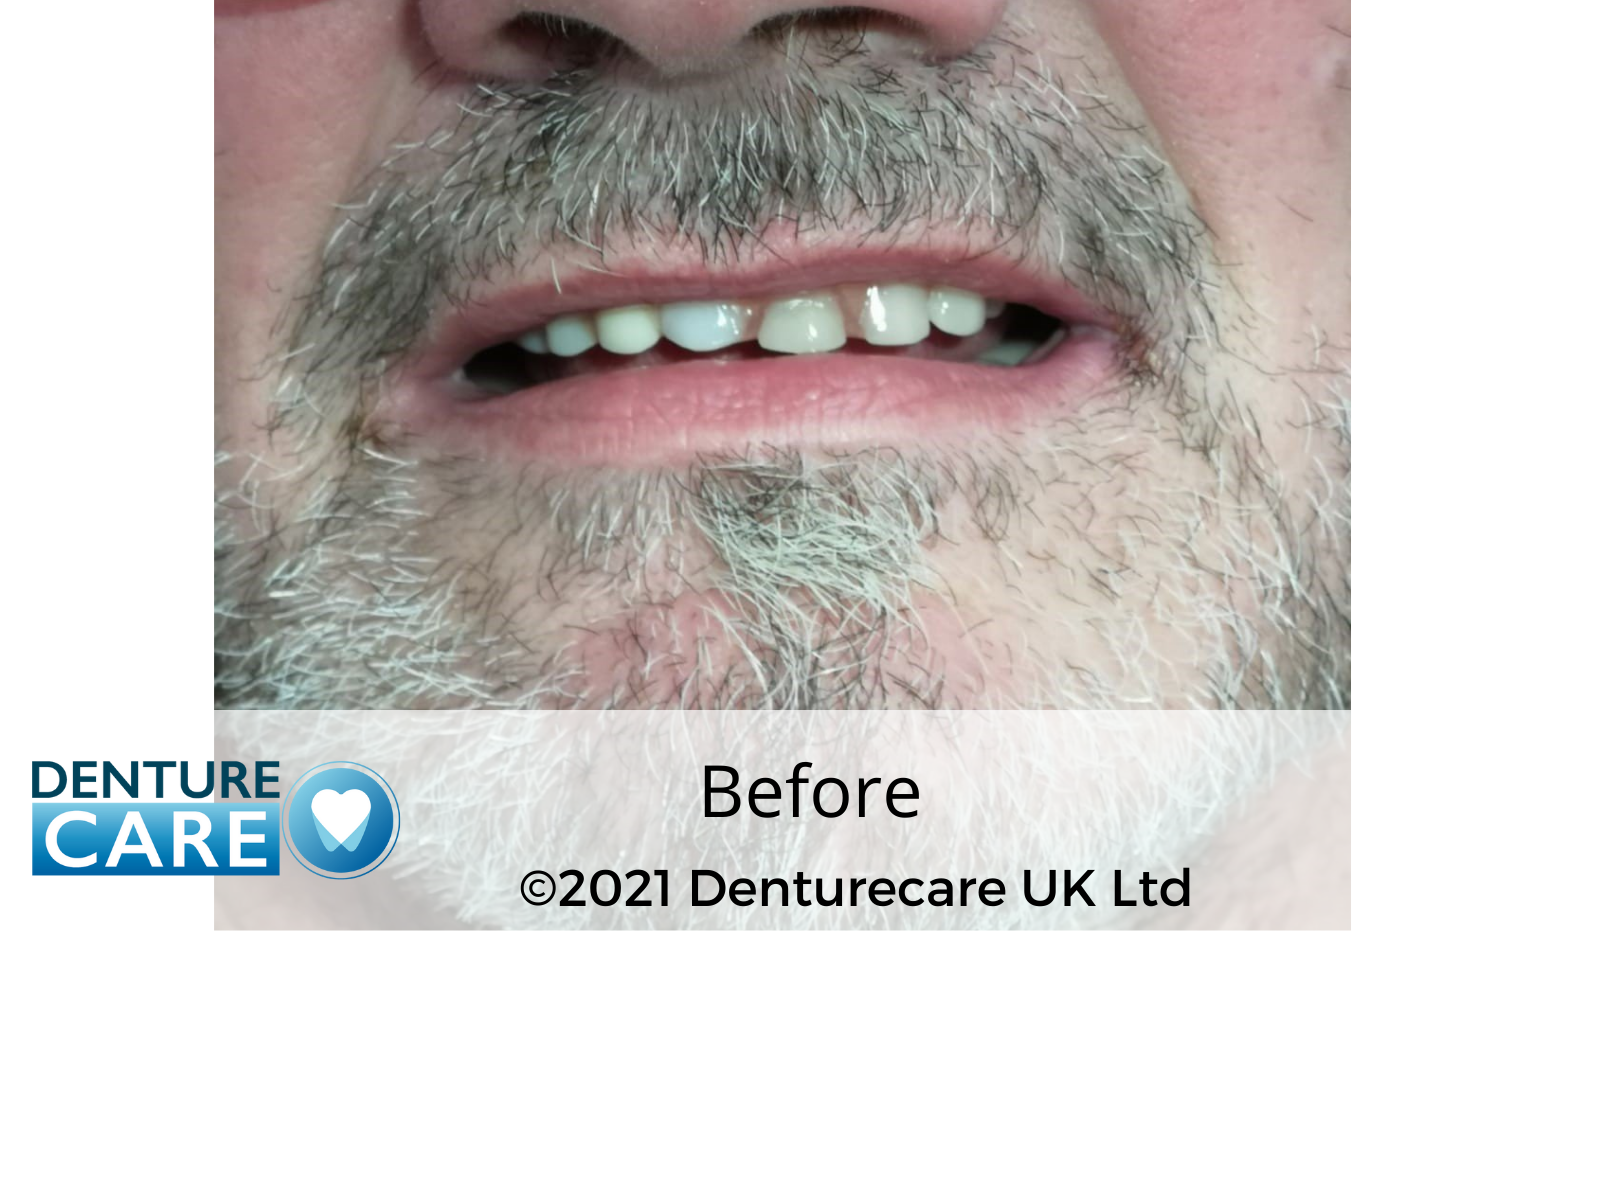 Before new dentures